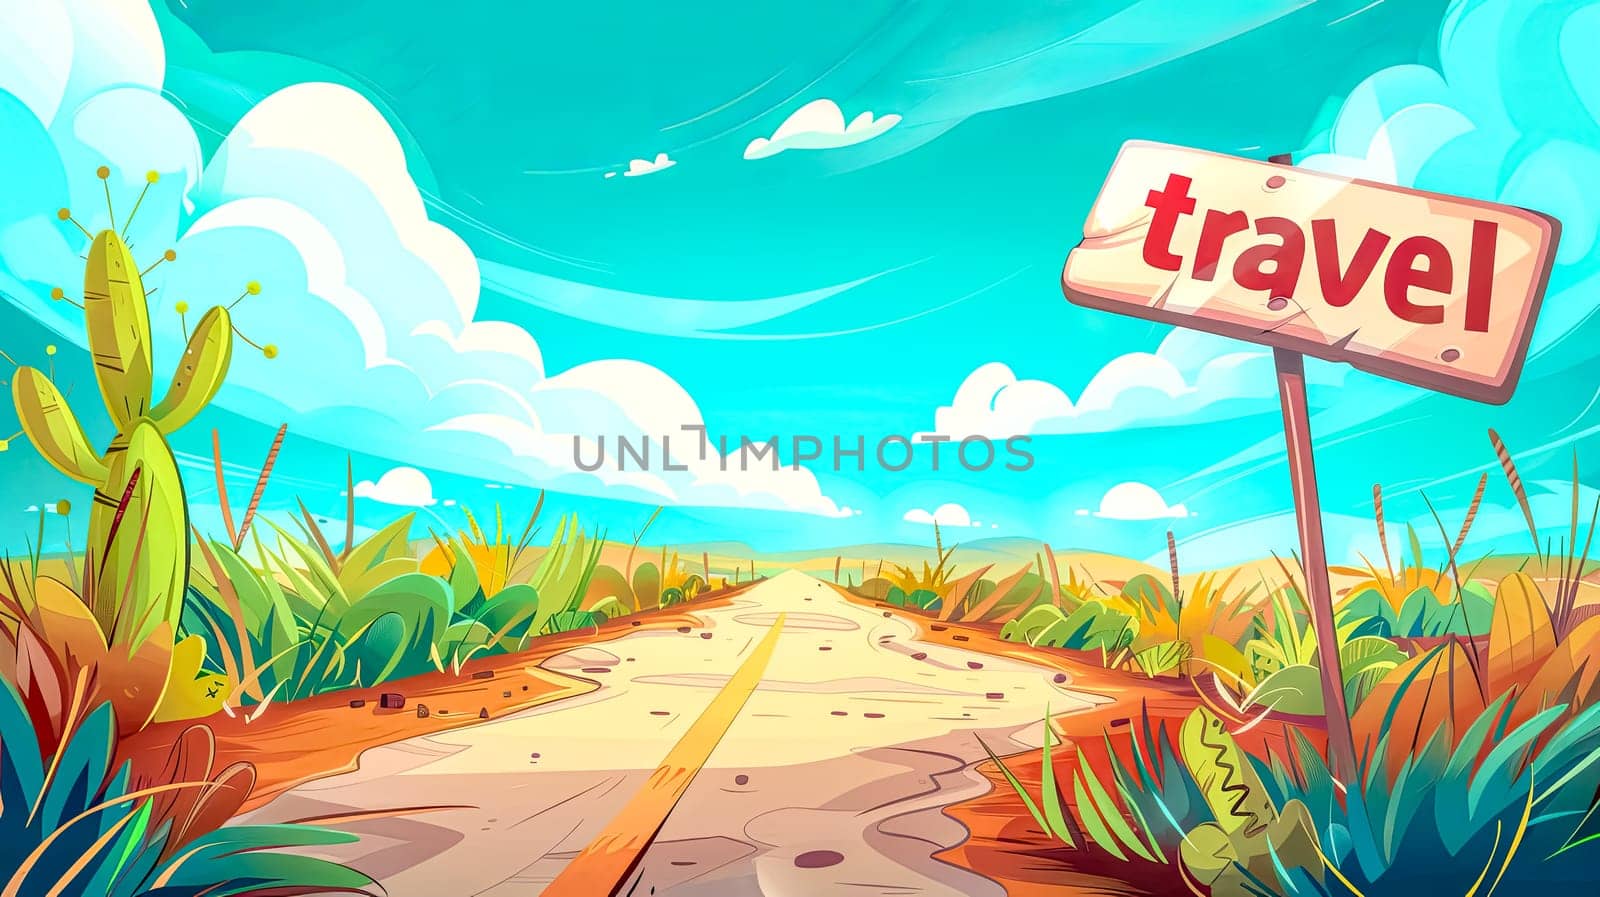 Cartoon illustration of a travel signpost on a vibrant desert road under a blue sky